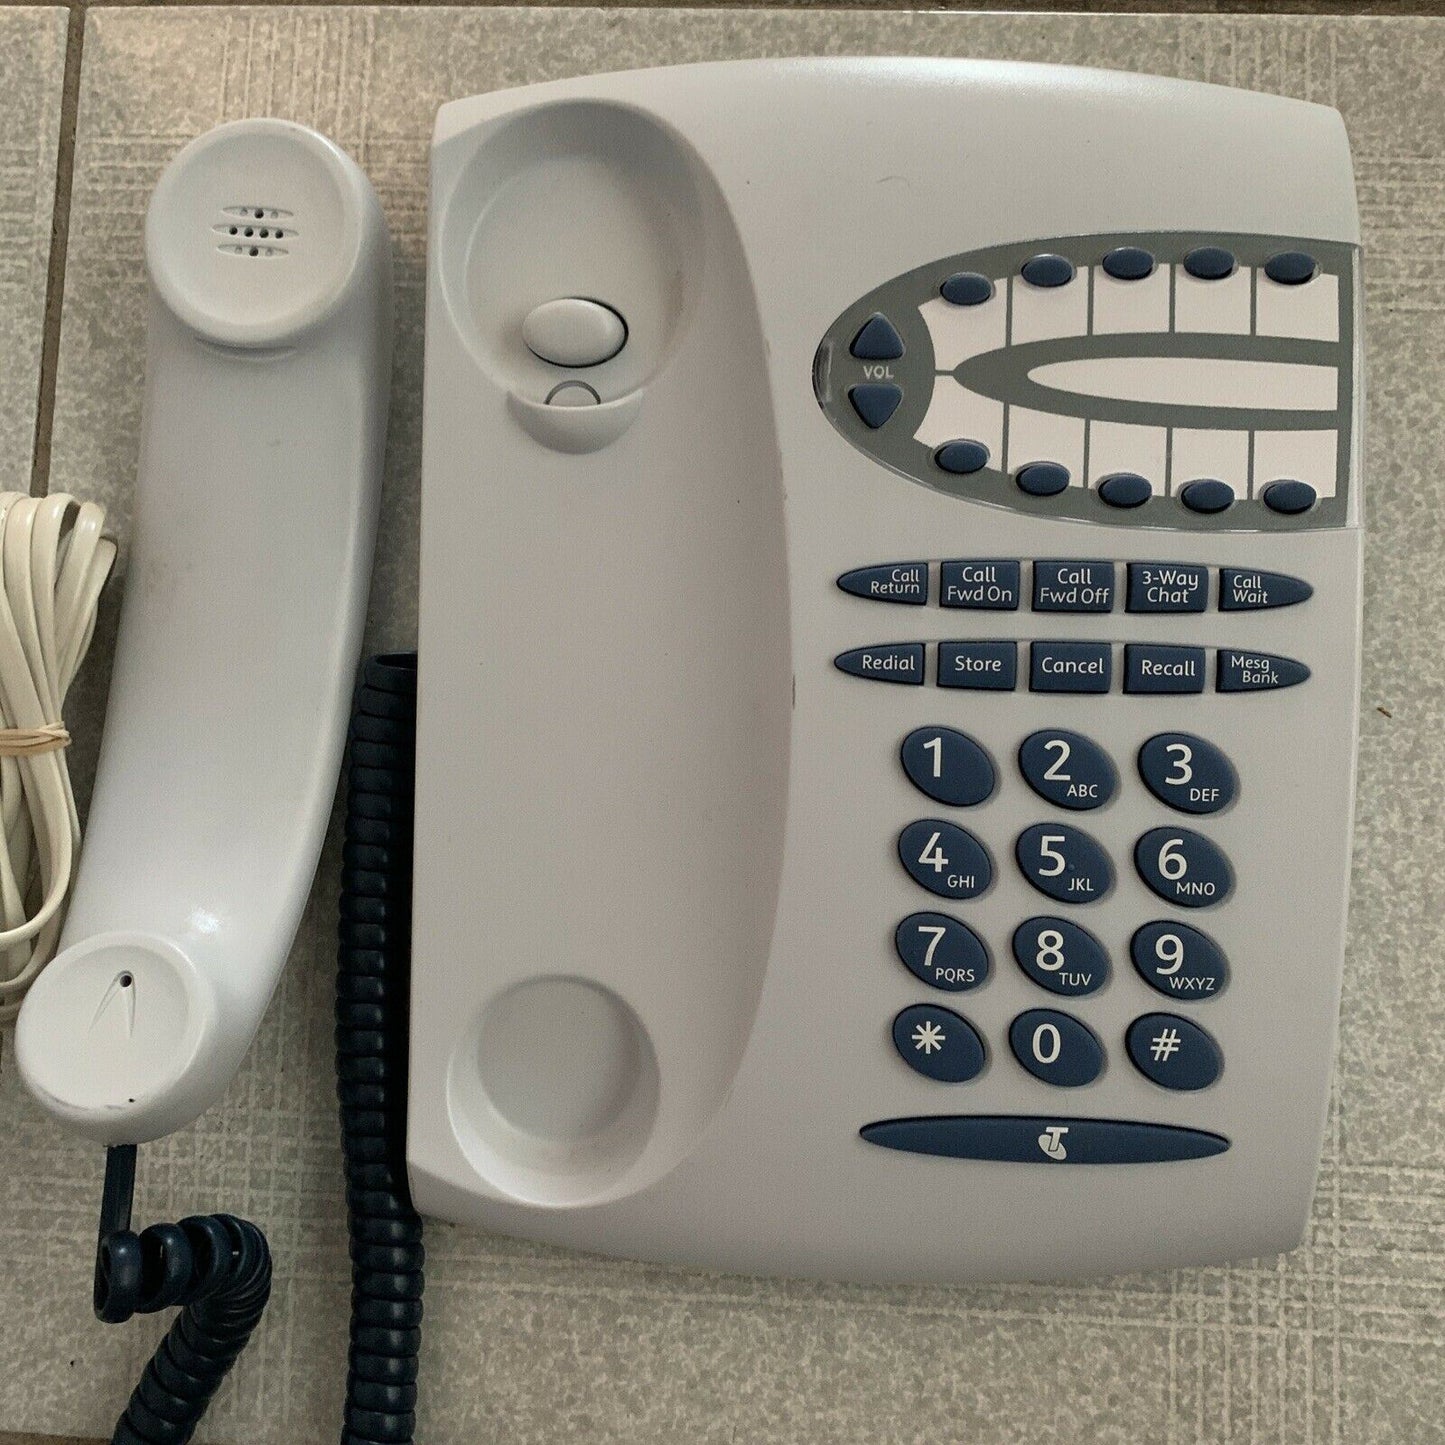 Telstra T1000S Touchphone Corded Telephone Home Phone